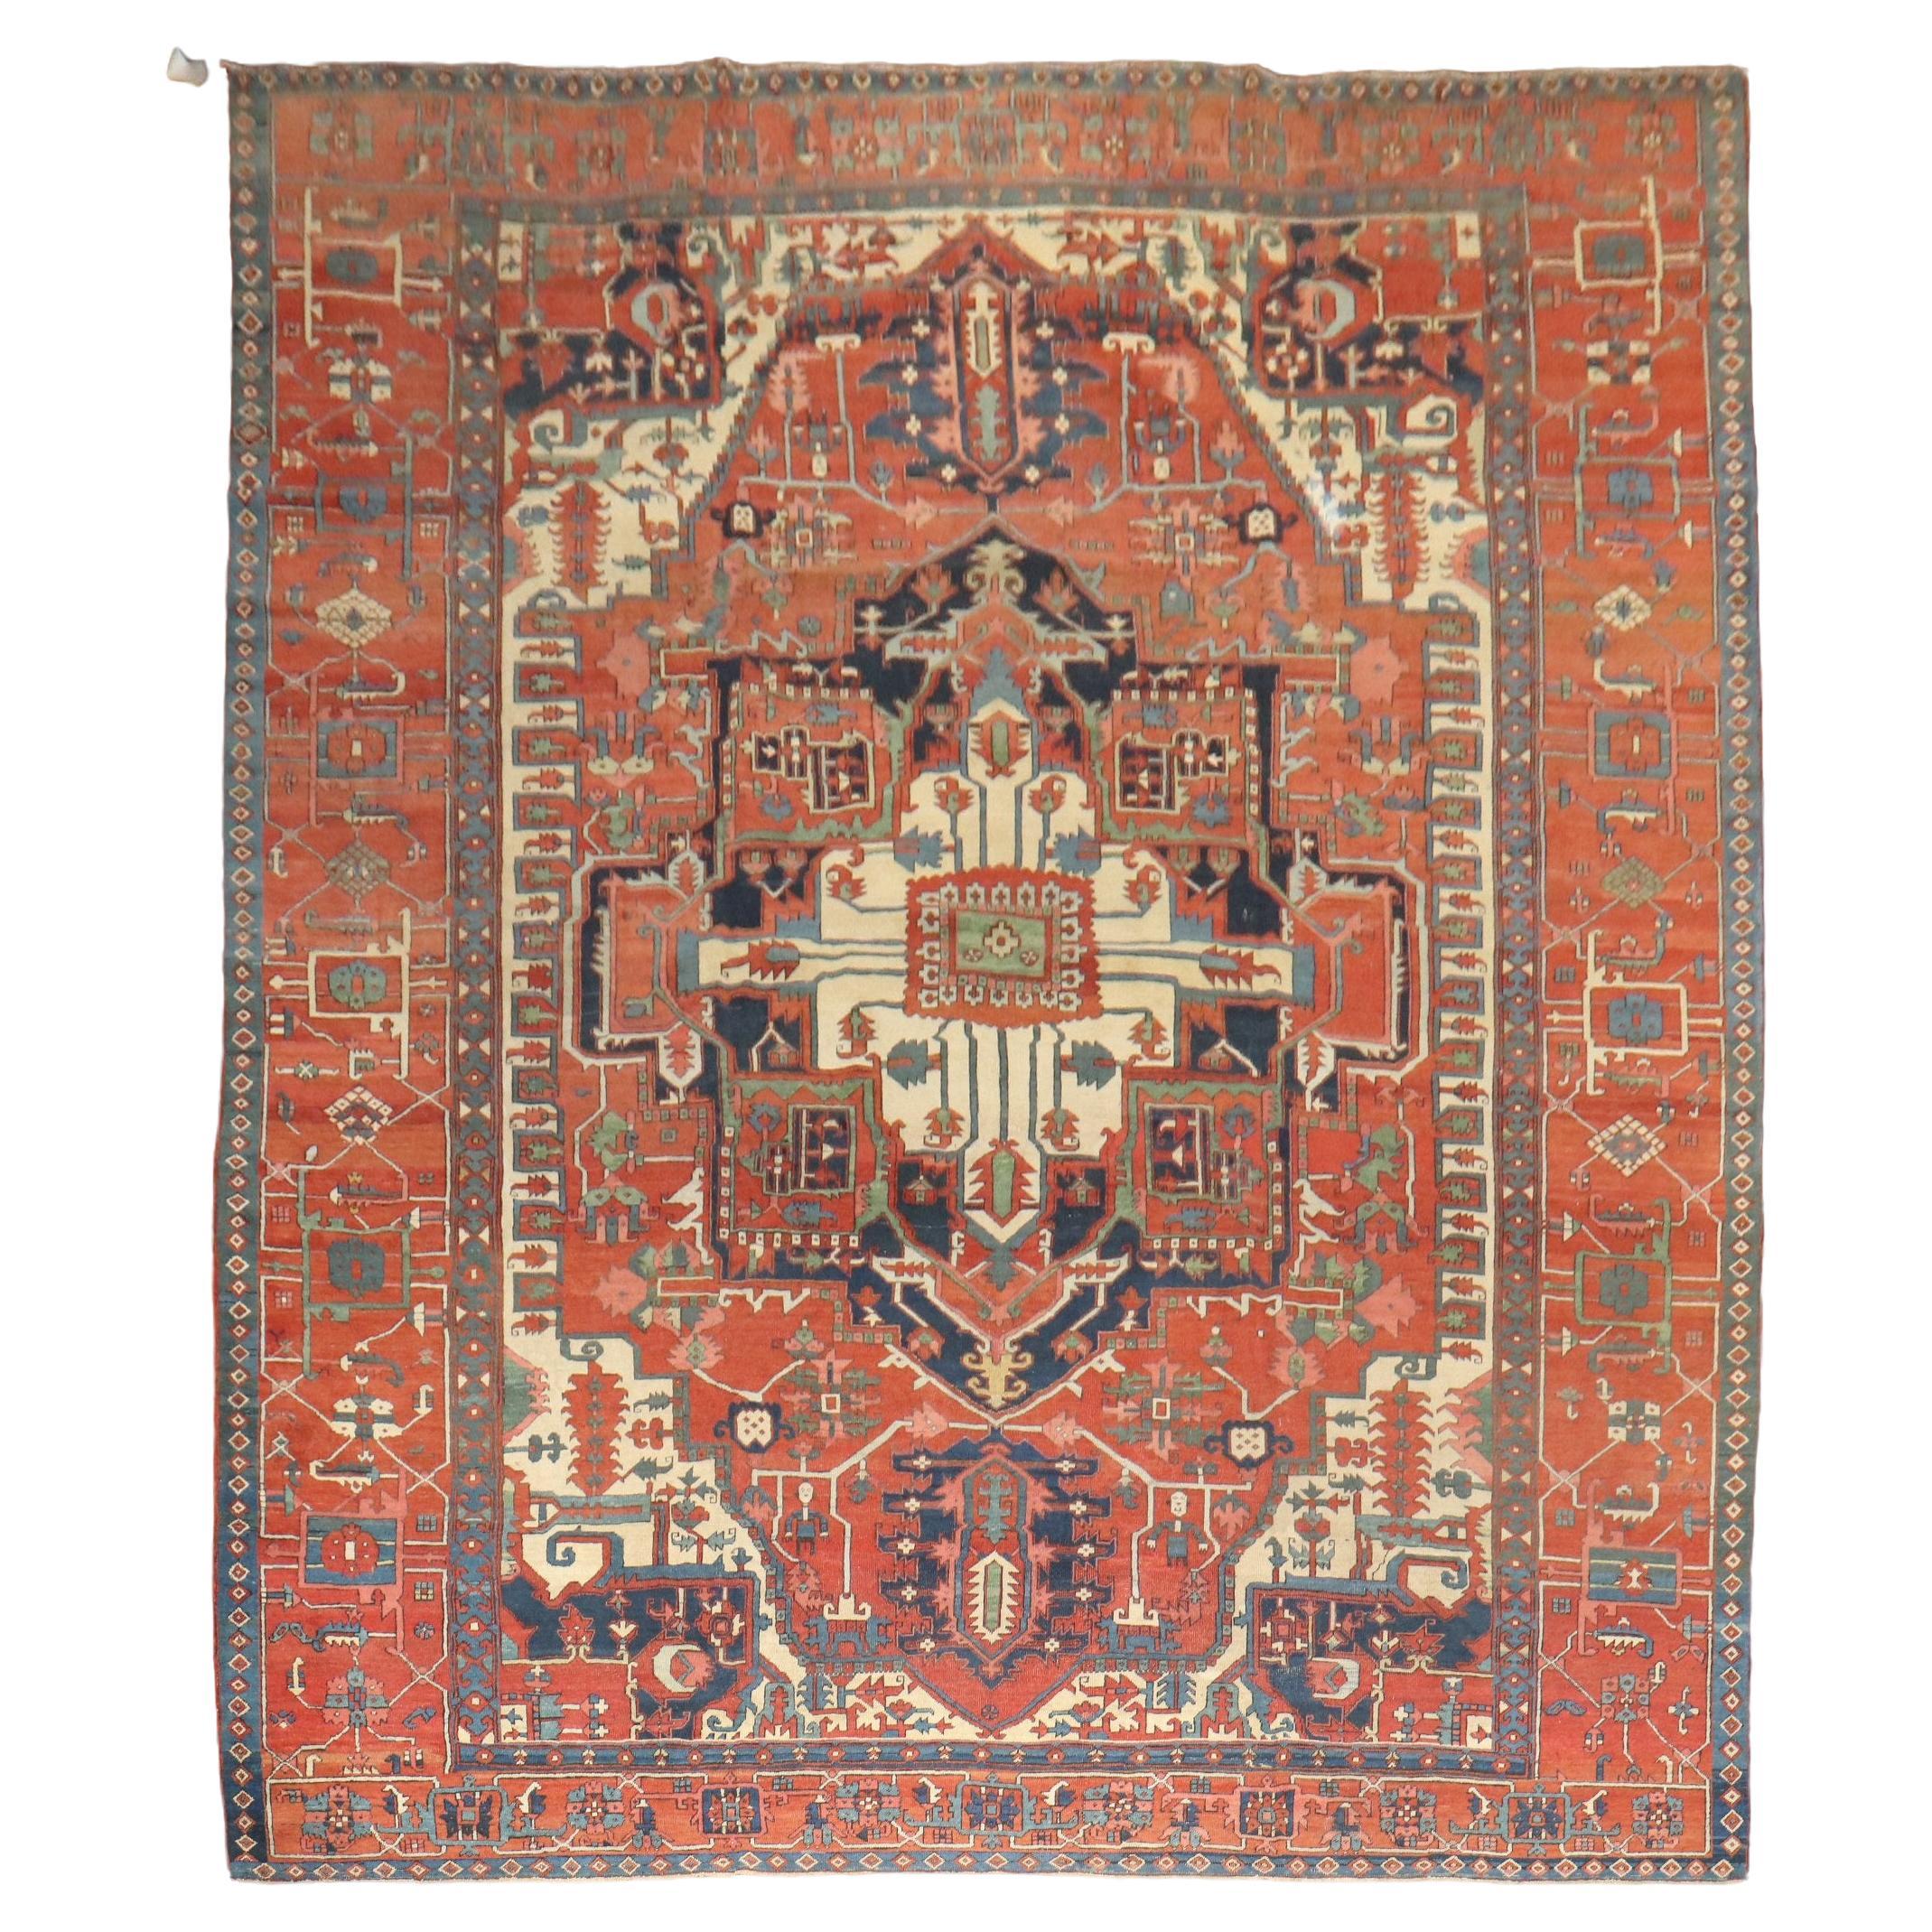 Zabihi Collection Pictorial Animal Figure Antique Persian Serapi Carpet